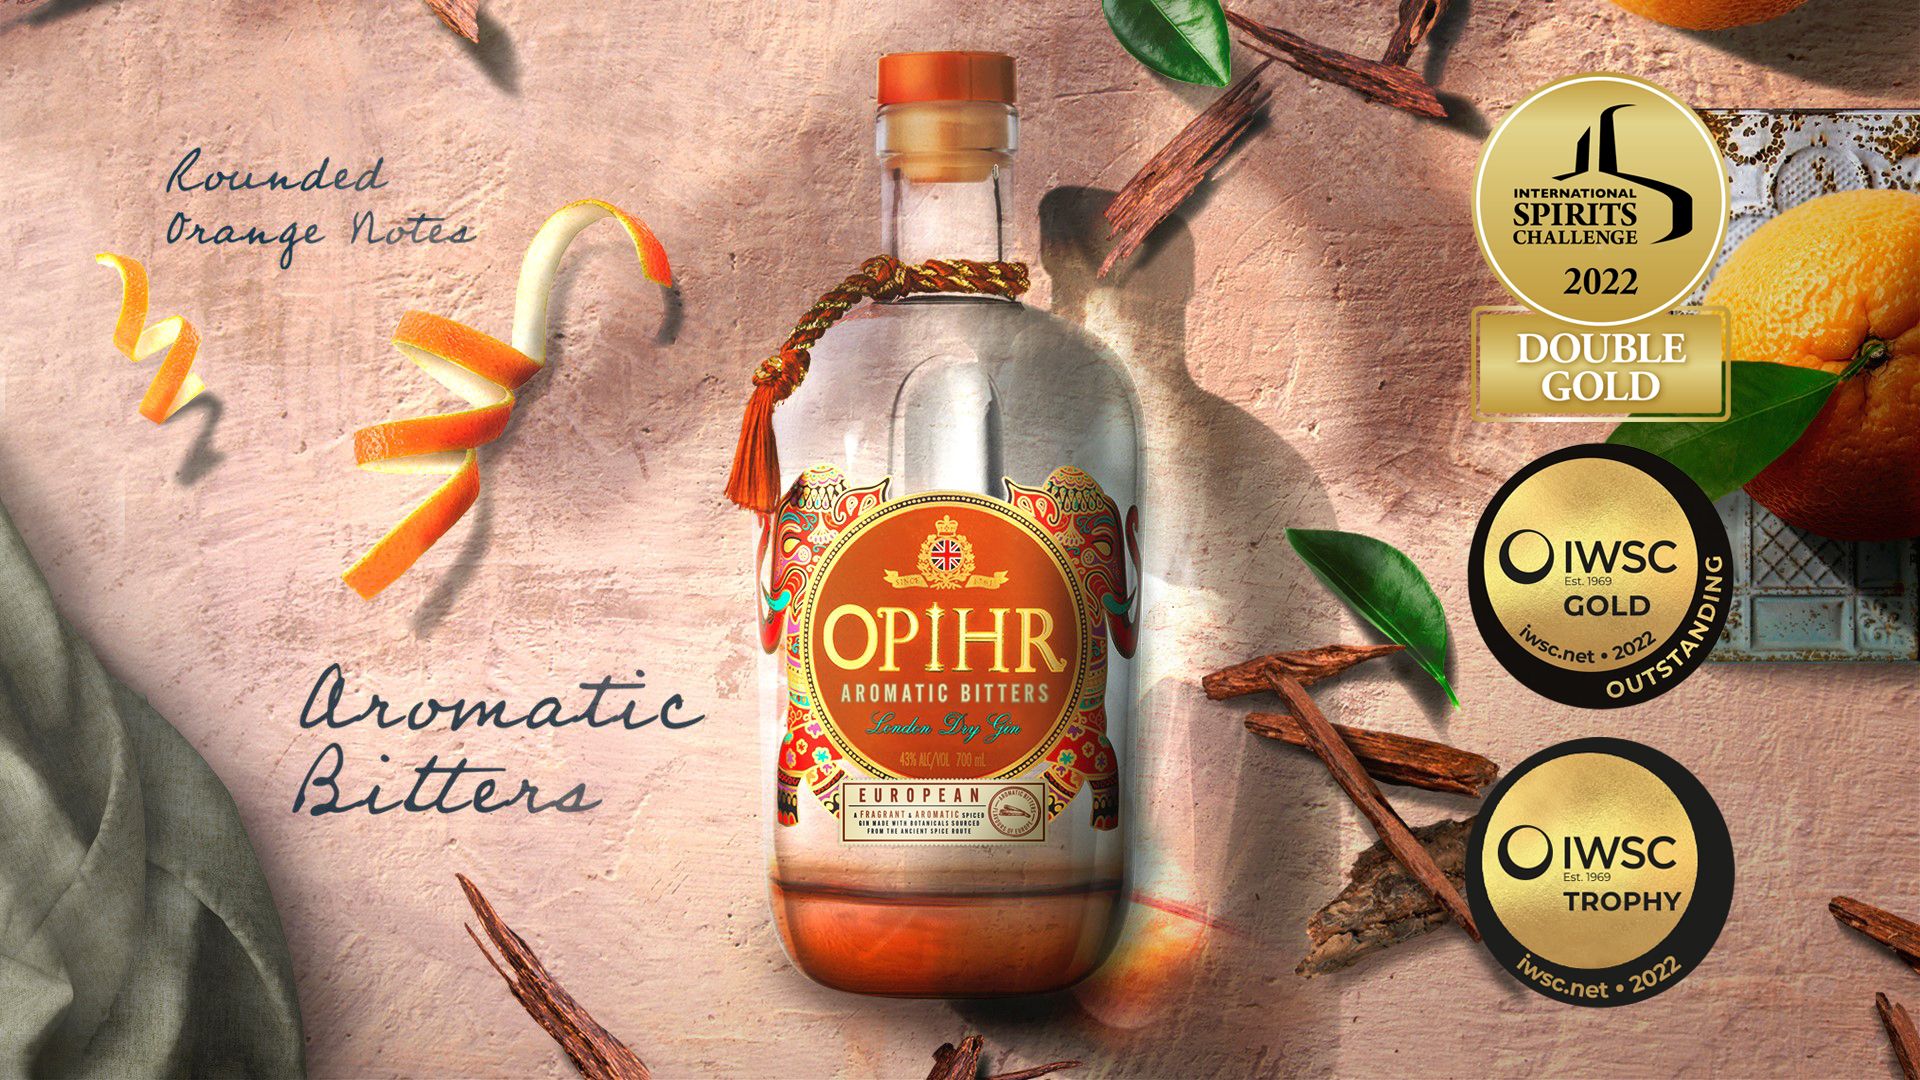 OPIHR Aromatic Bitters - European Edition 0,7l